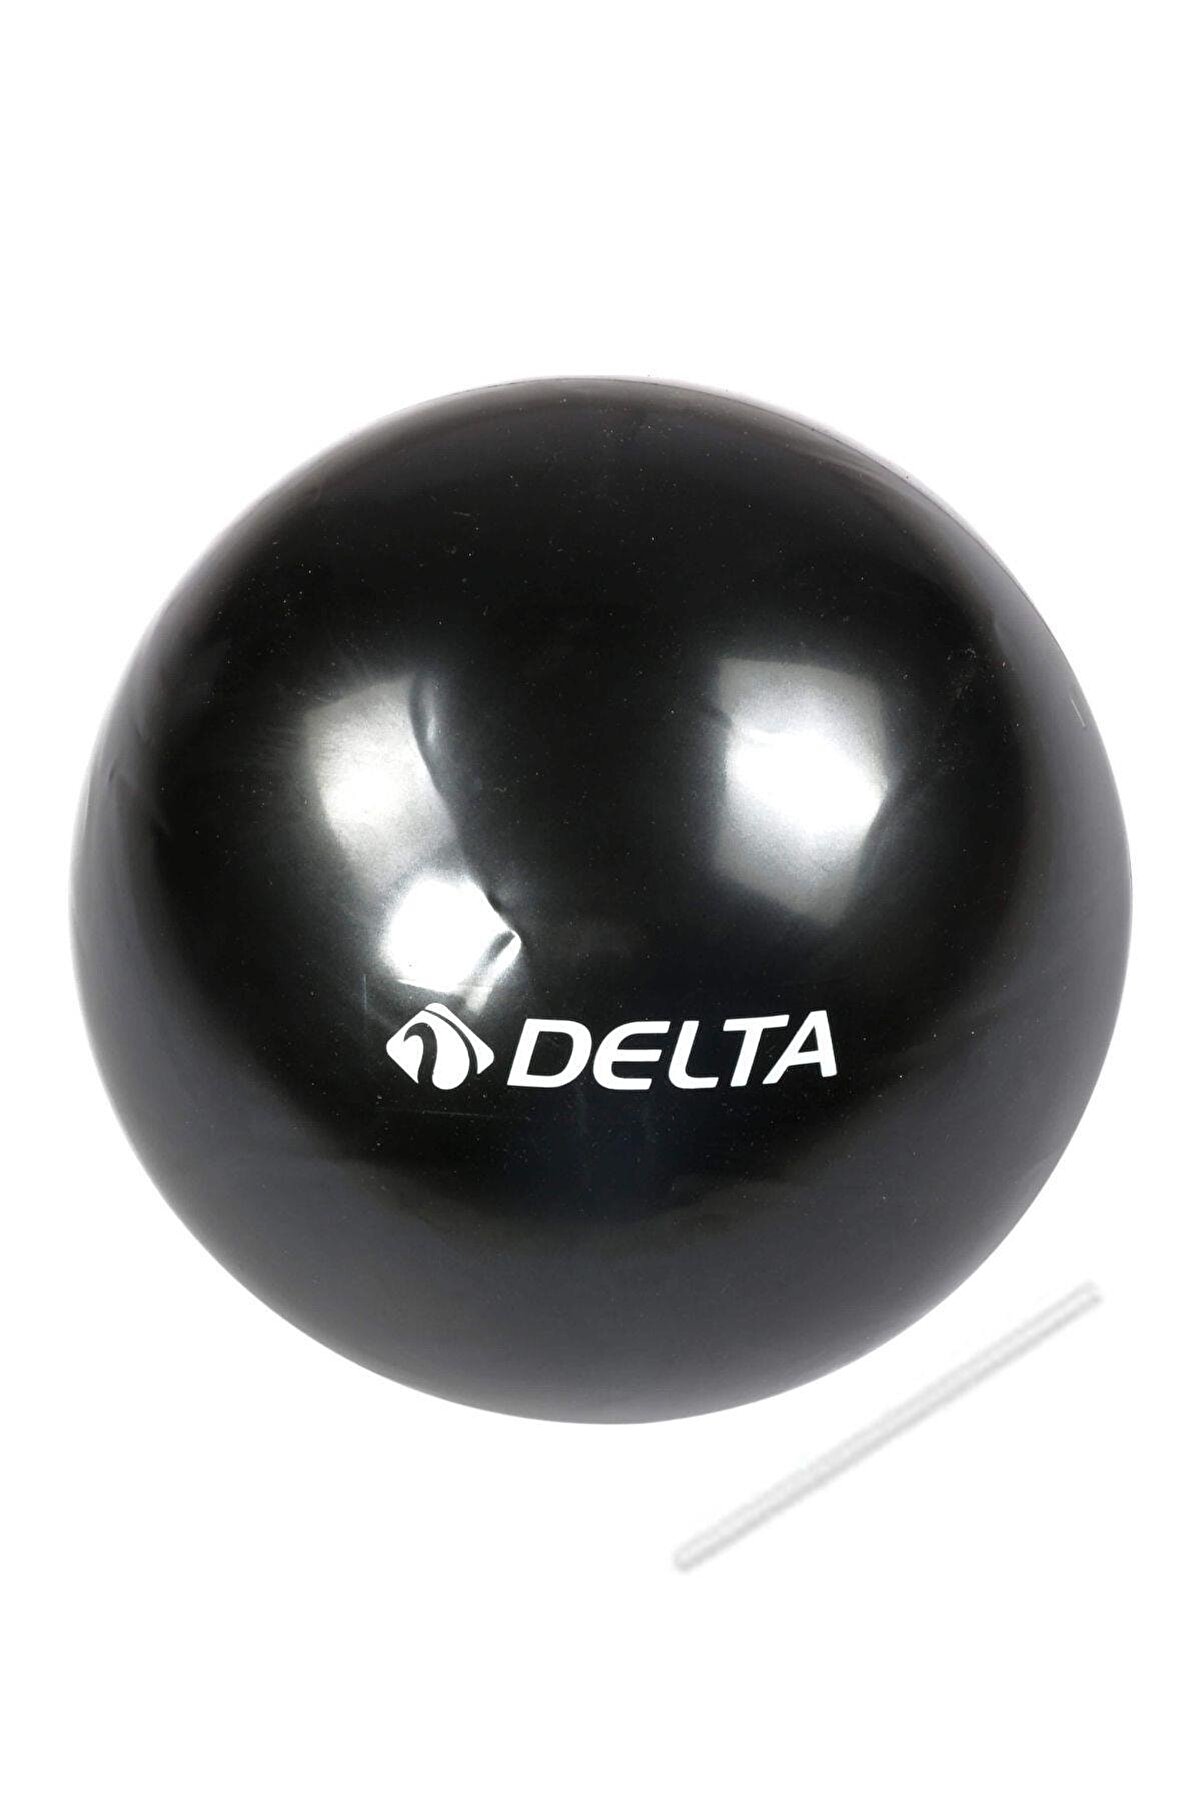 Delta 25 Cm Dura-strong Mini Pilates Topu Denge Egzersiz Topu